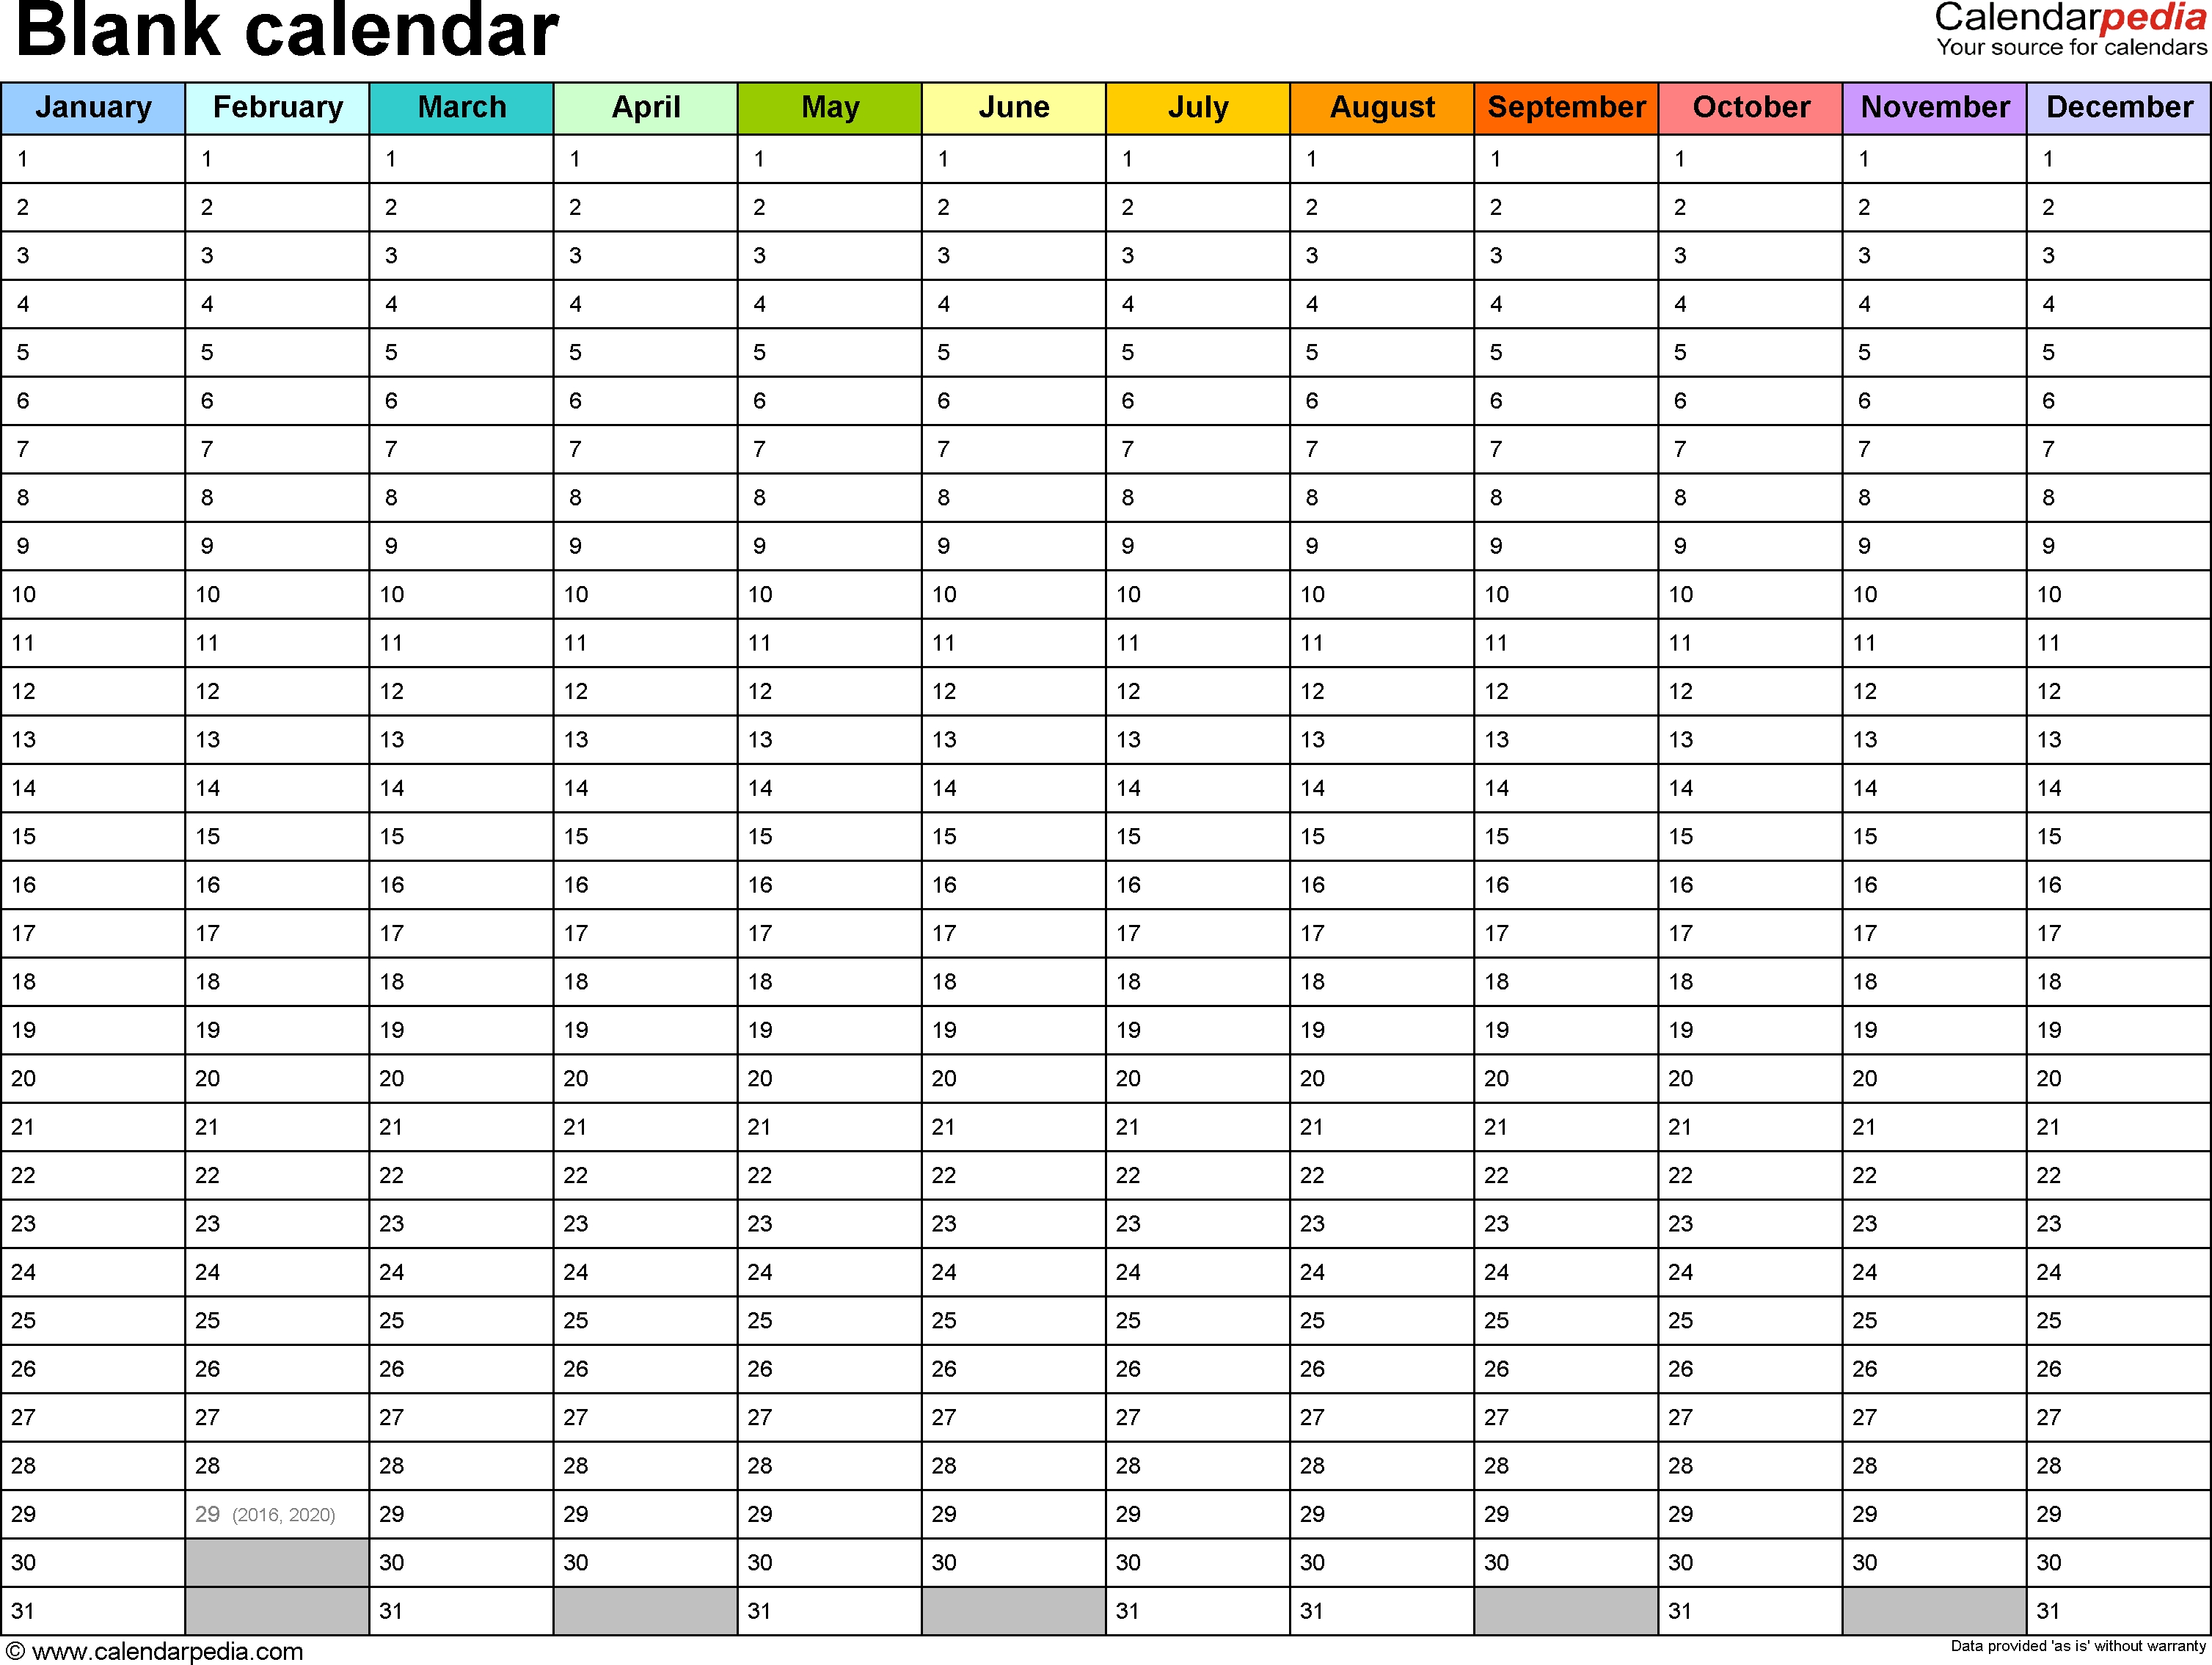 Blank Calendar - 9 Free Printable Microsoft Word Templates-5 Day Template Calendar Blank